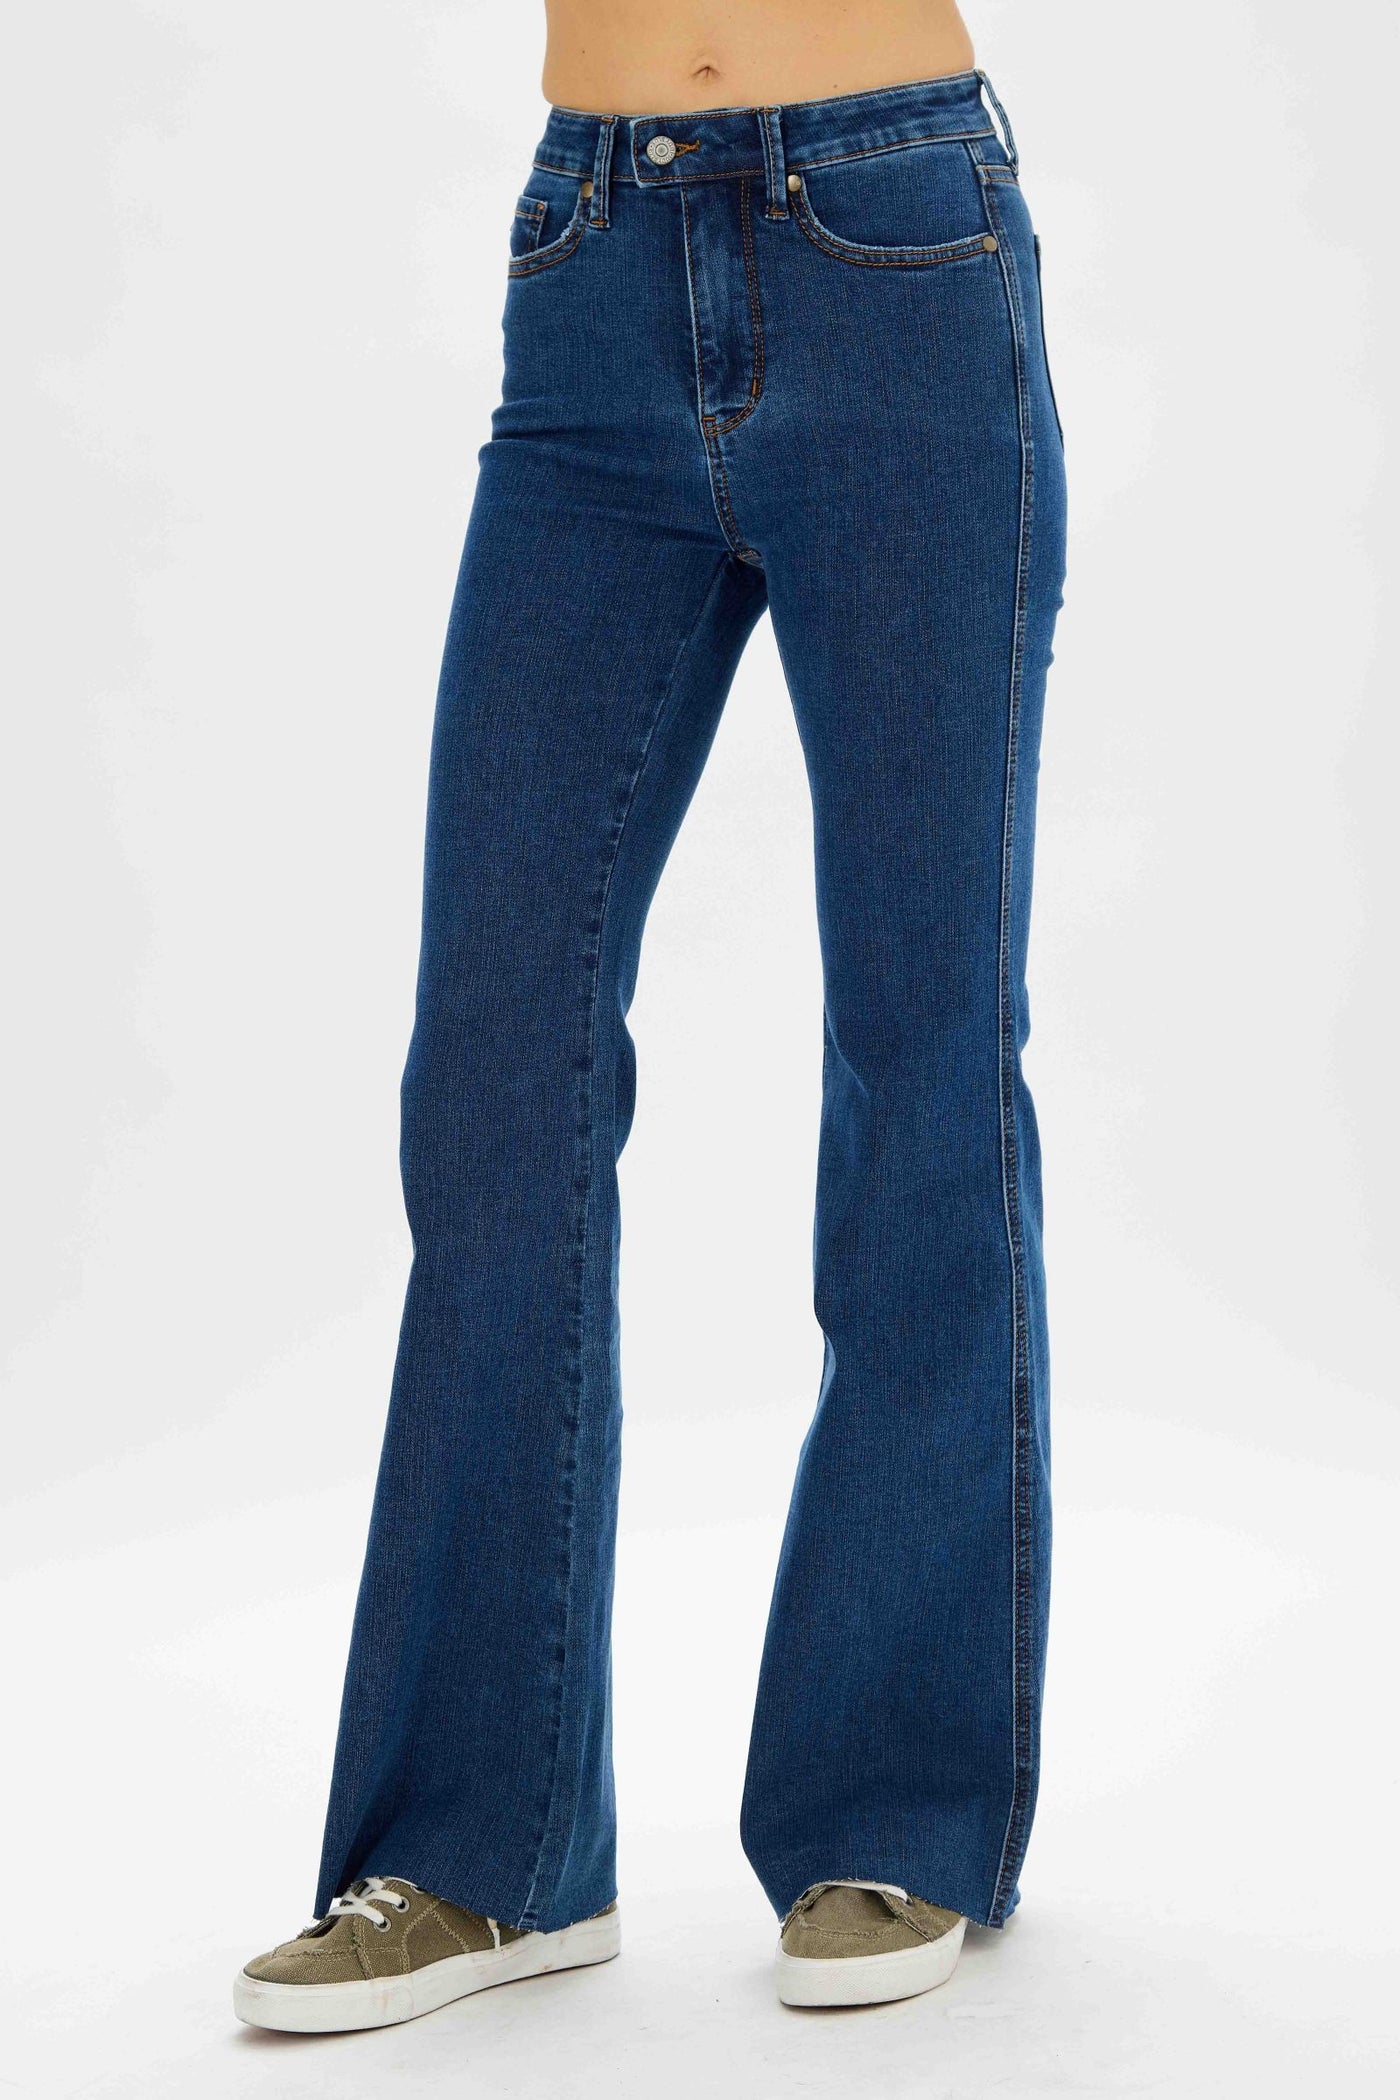 Judy Blue Jeans 88611